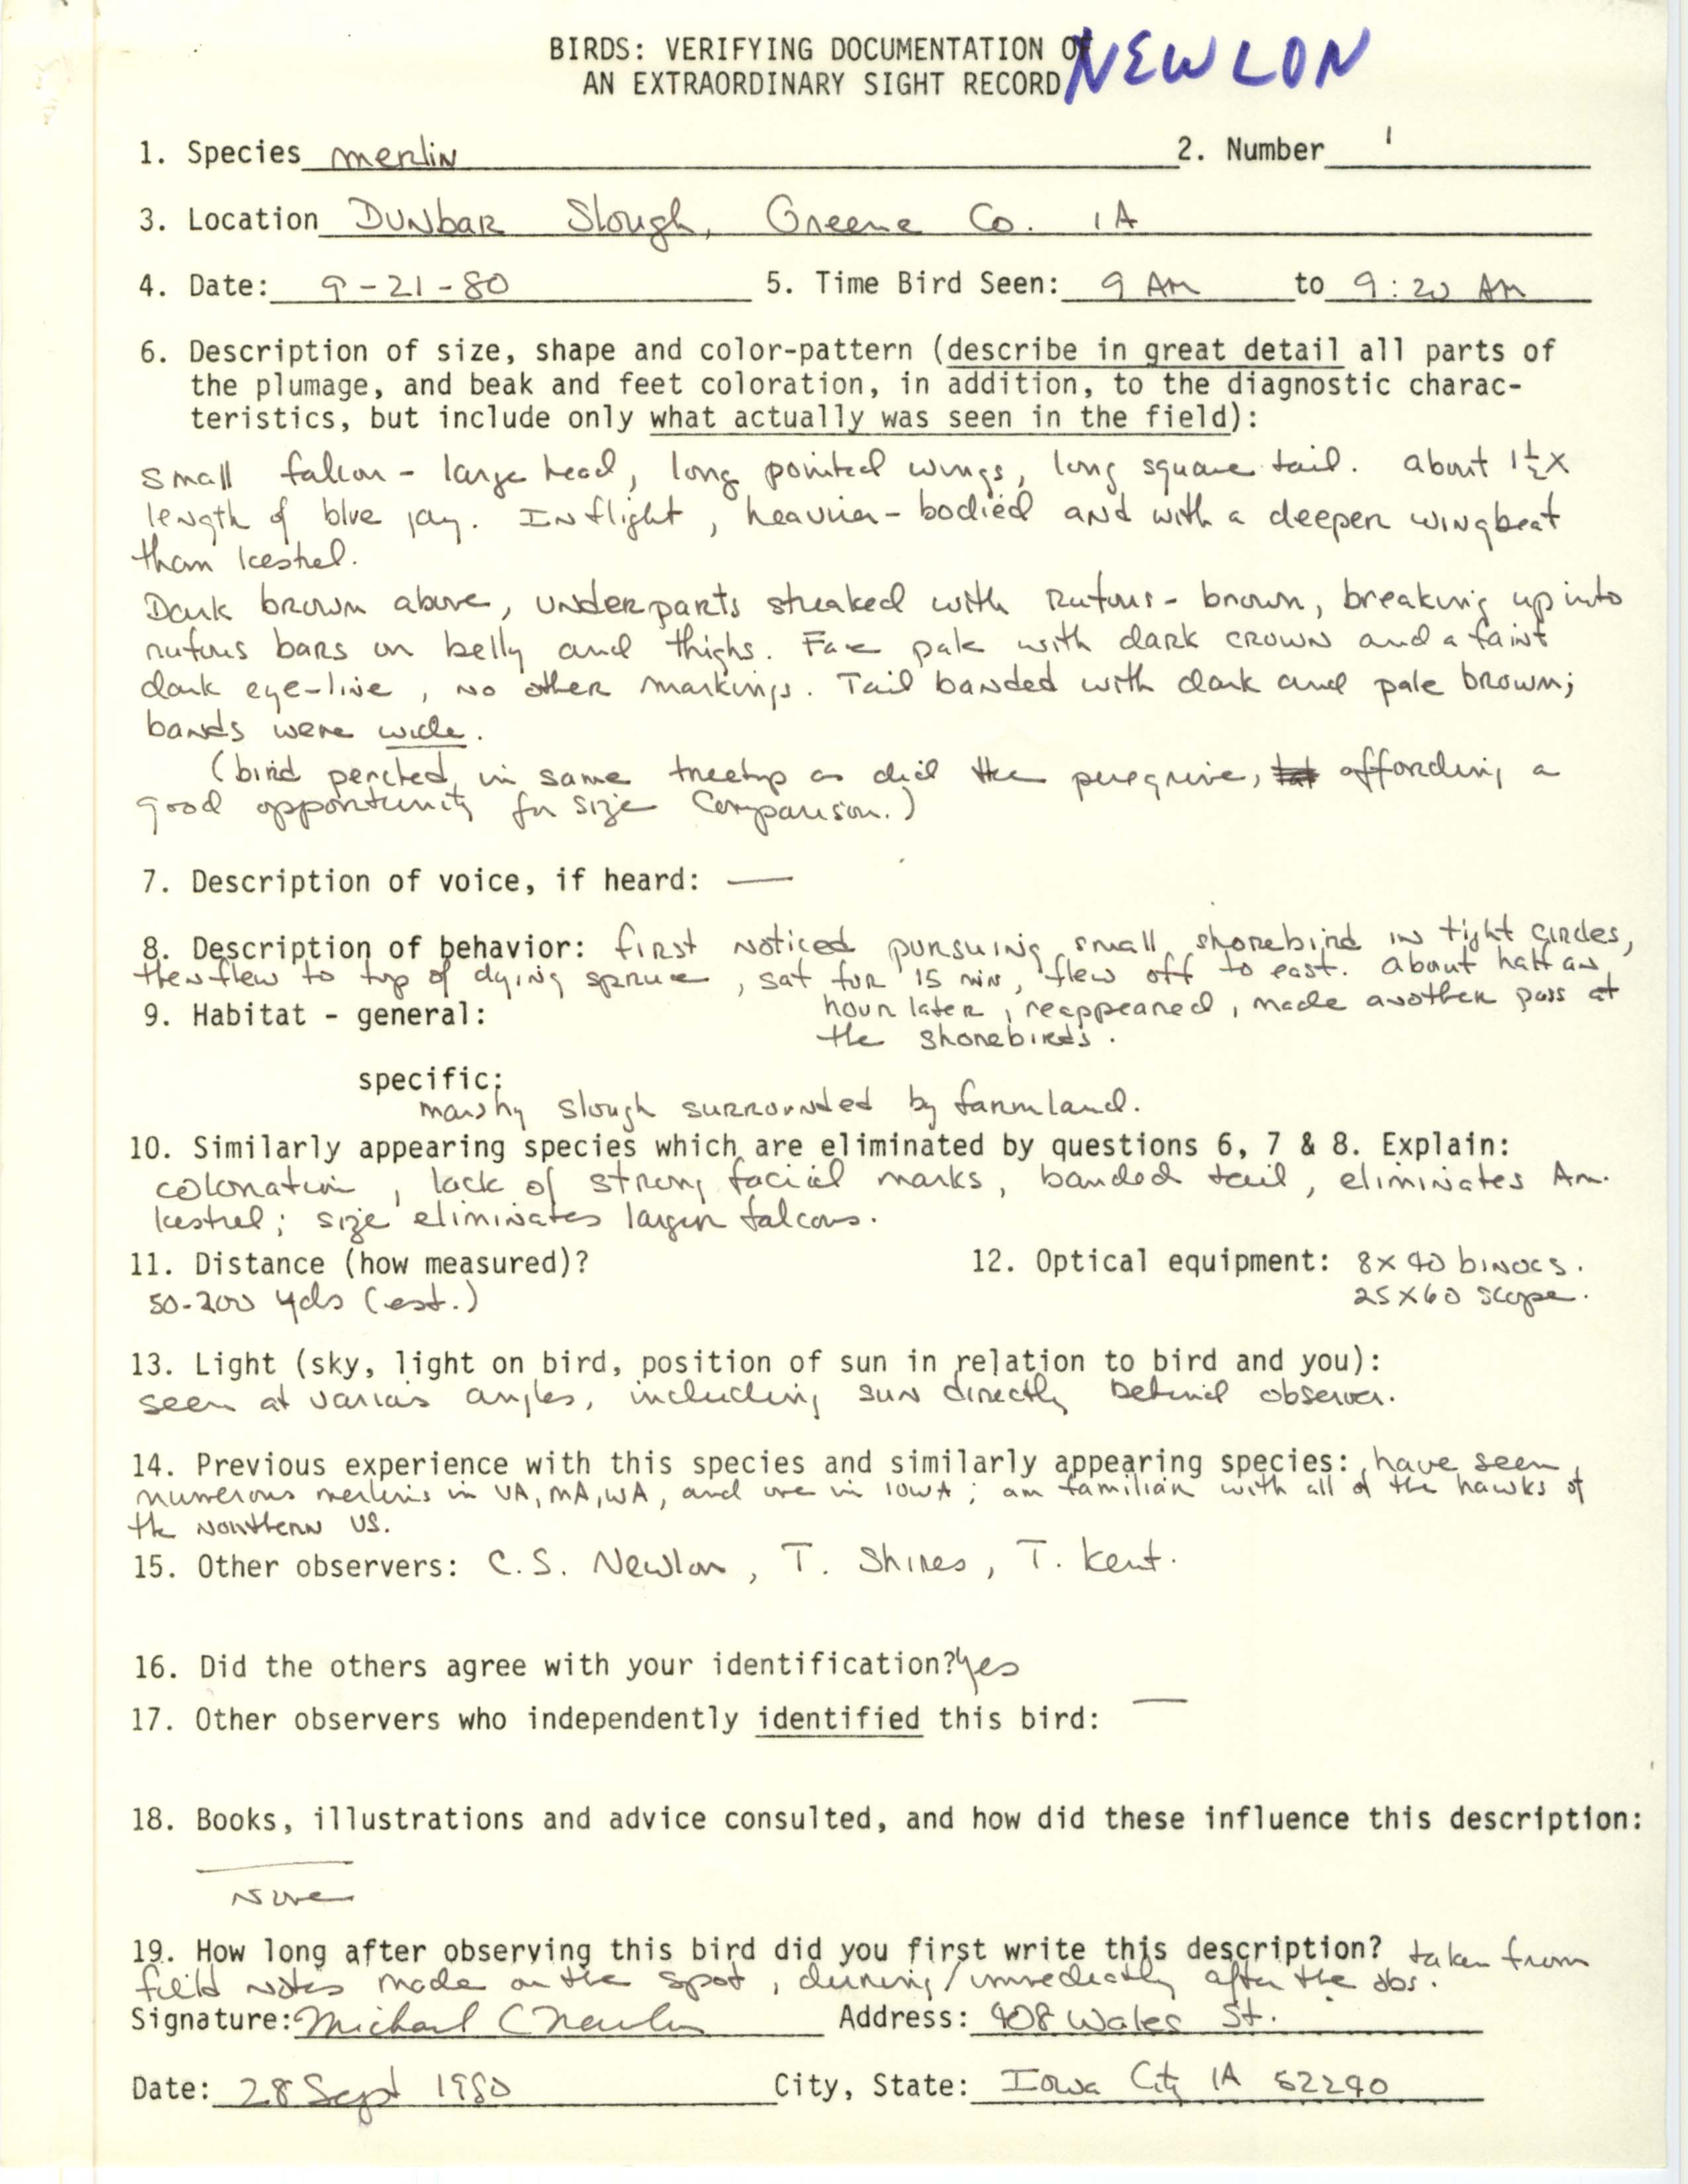 Rare bird documentation form for Merlin at Dunbar Slough, 1980